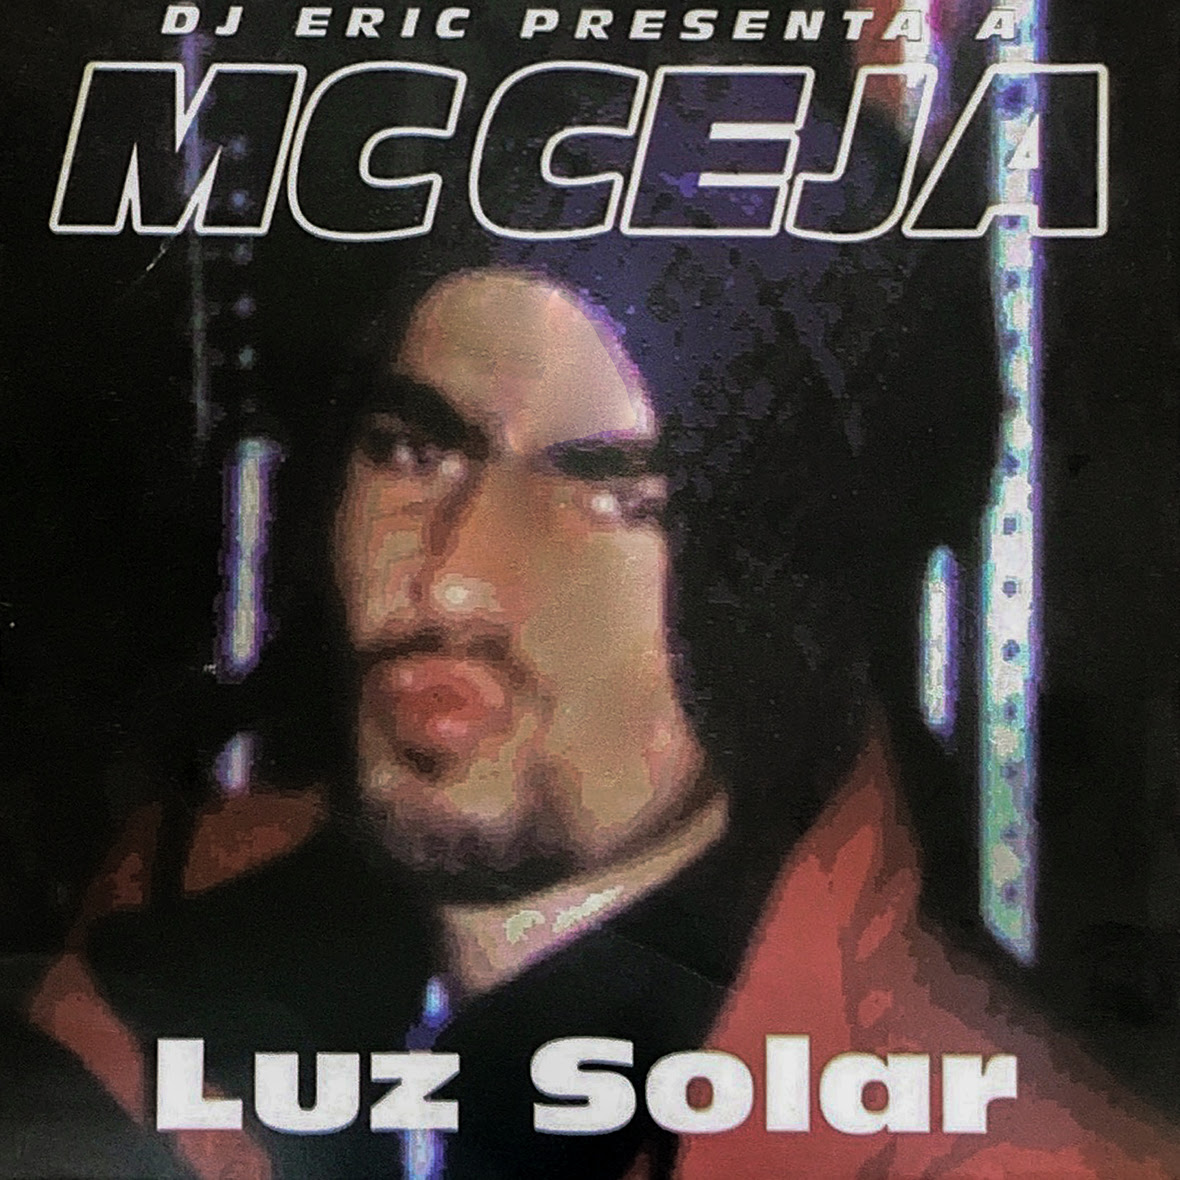 Dj-Eric-Presenta-a-Mc-Ceja-Luz-Solar-Cover